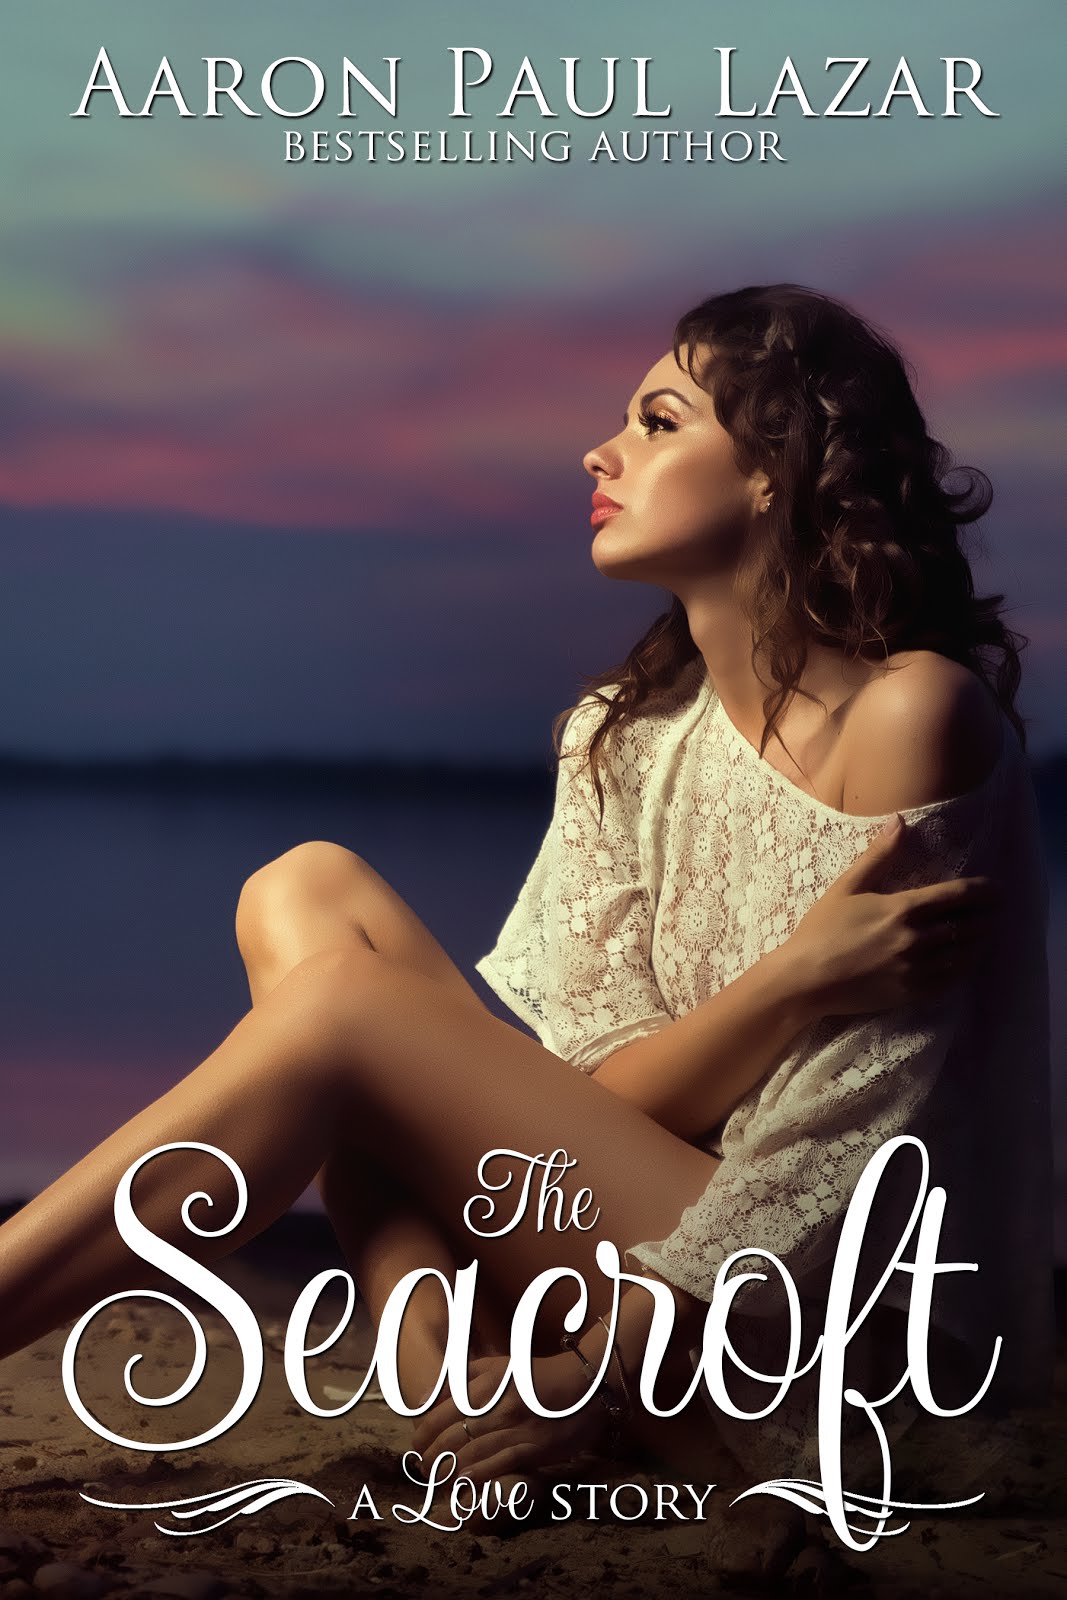 The Seacroft: a love story